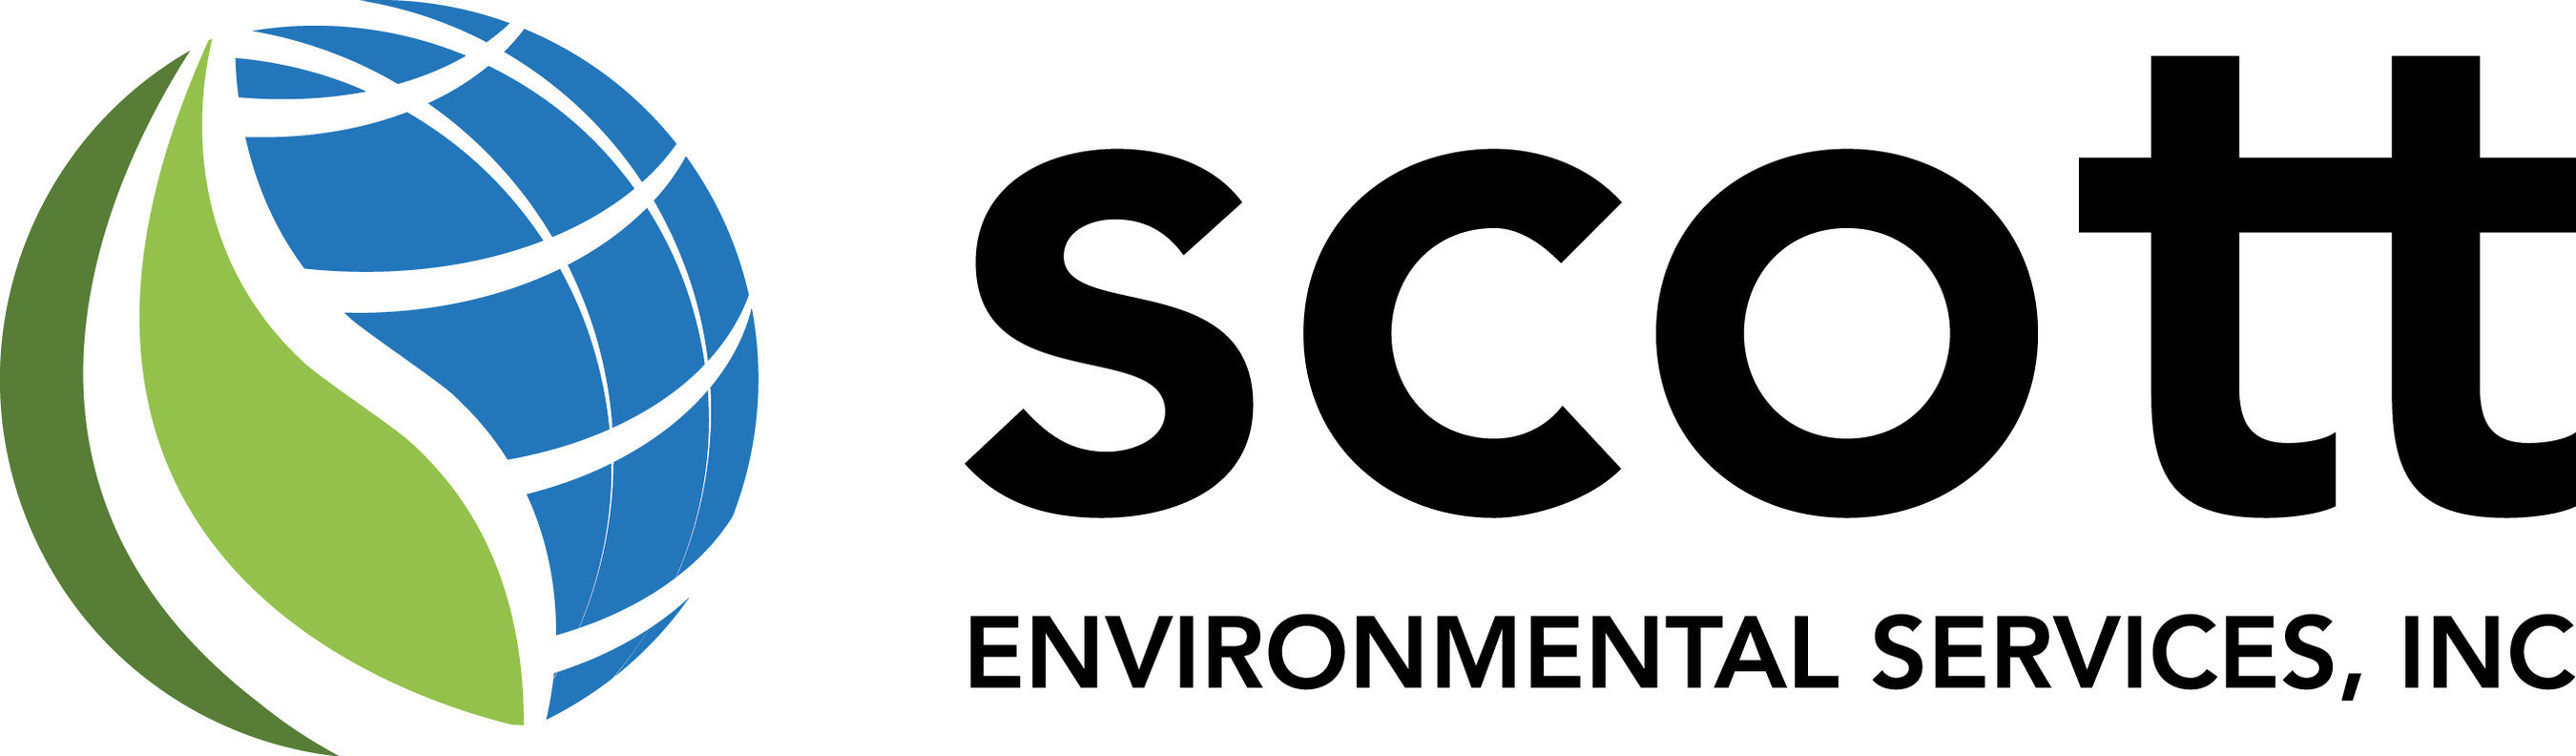 Scott Environmental Services, Inc. logo